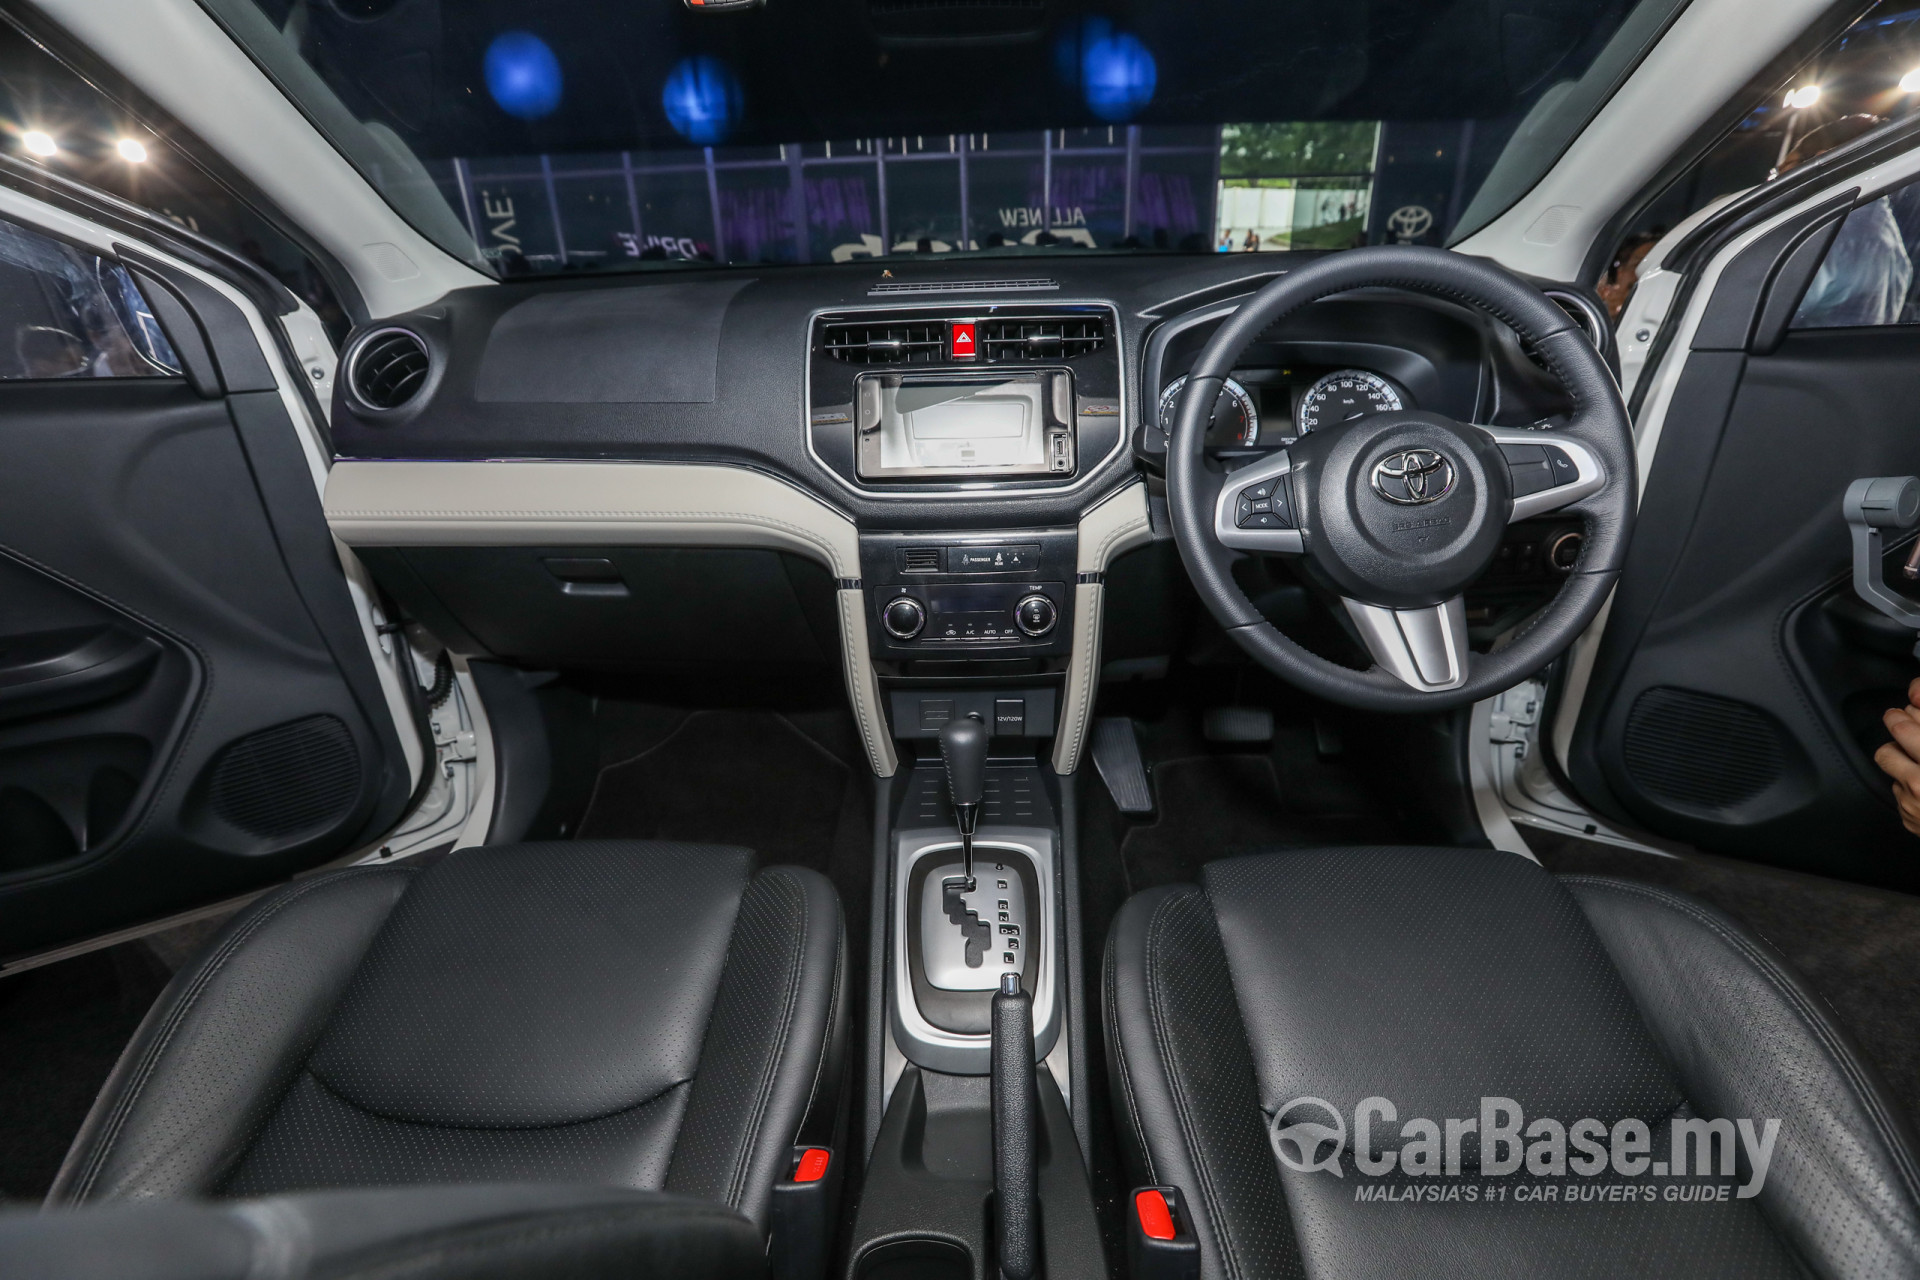 Toyota Rush F800 (2018) Interior Image #51896 in Malaysia 